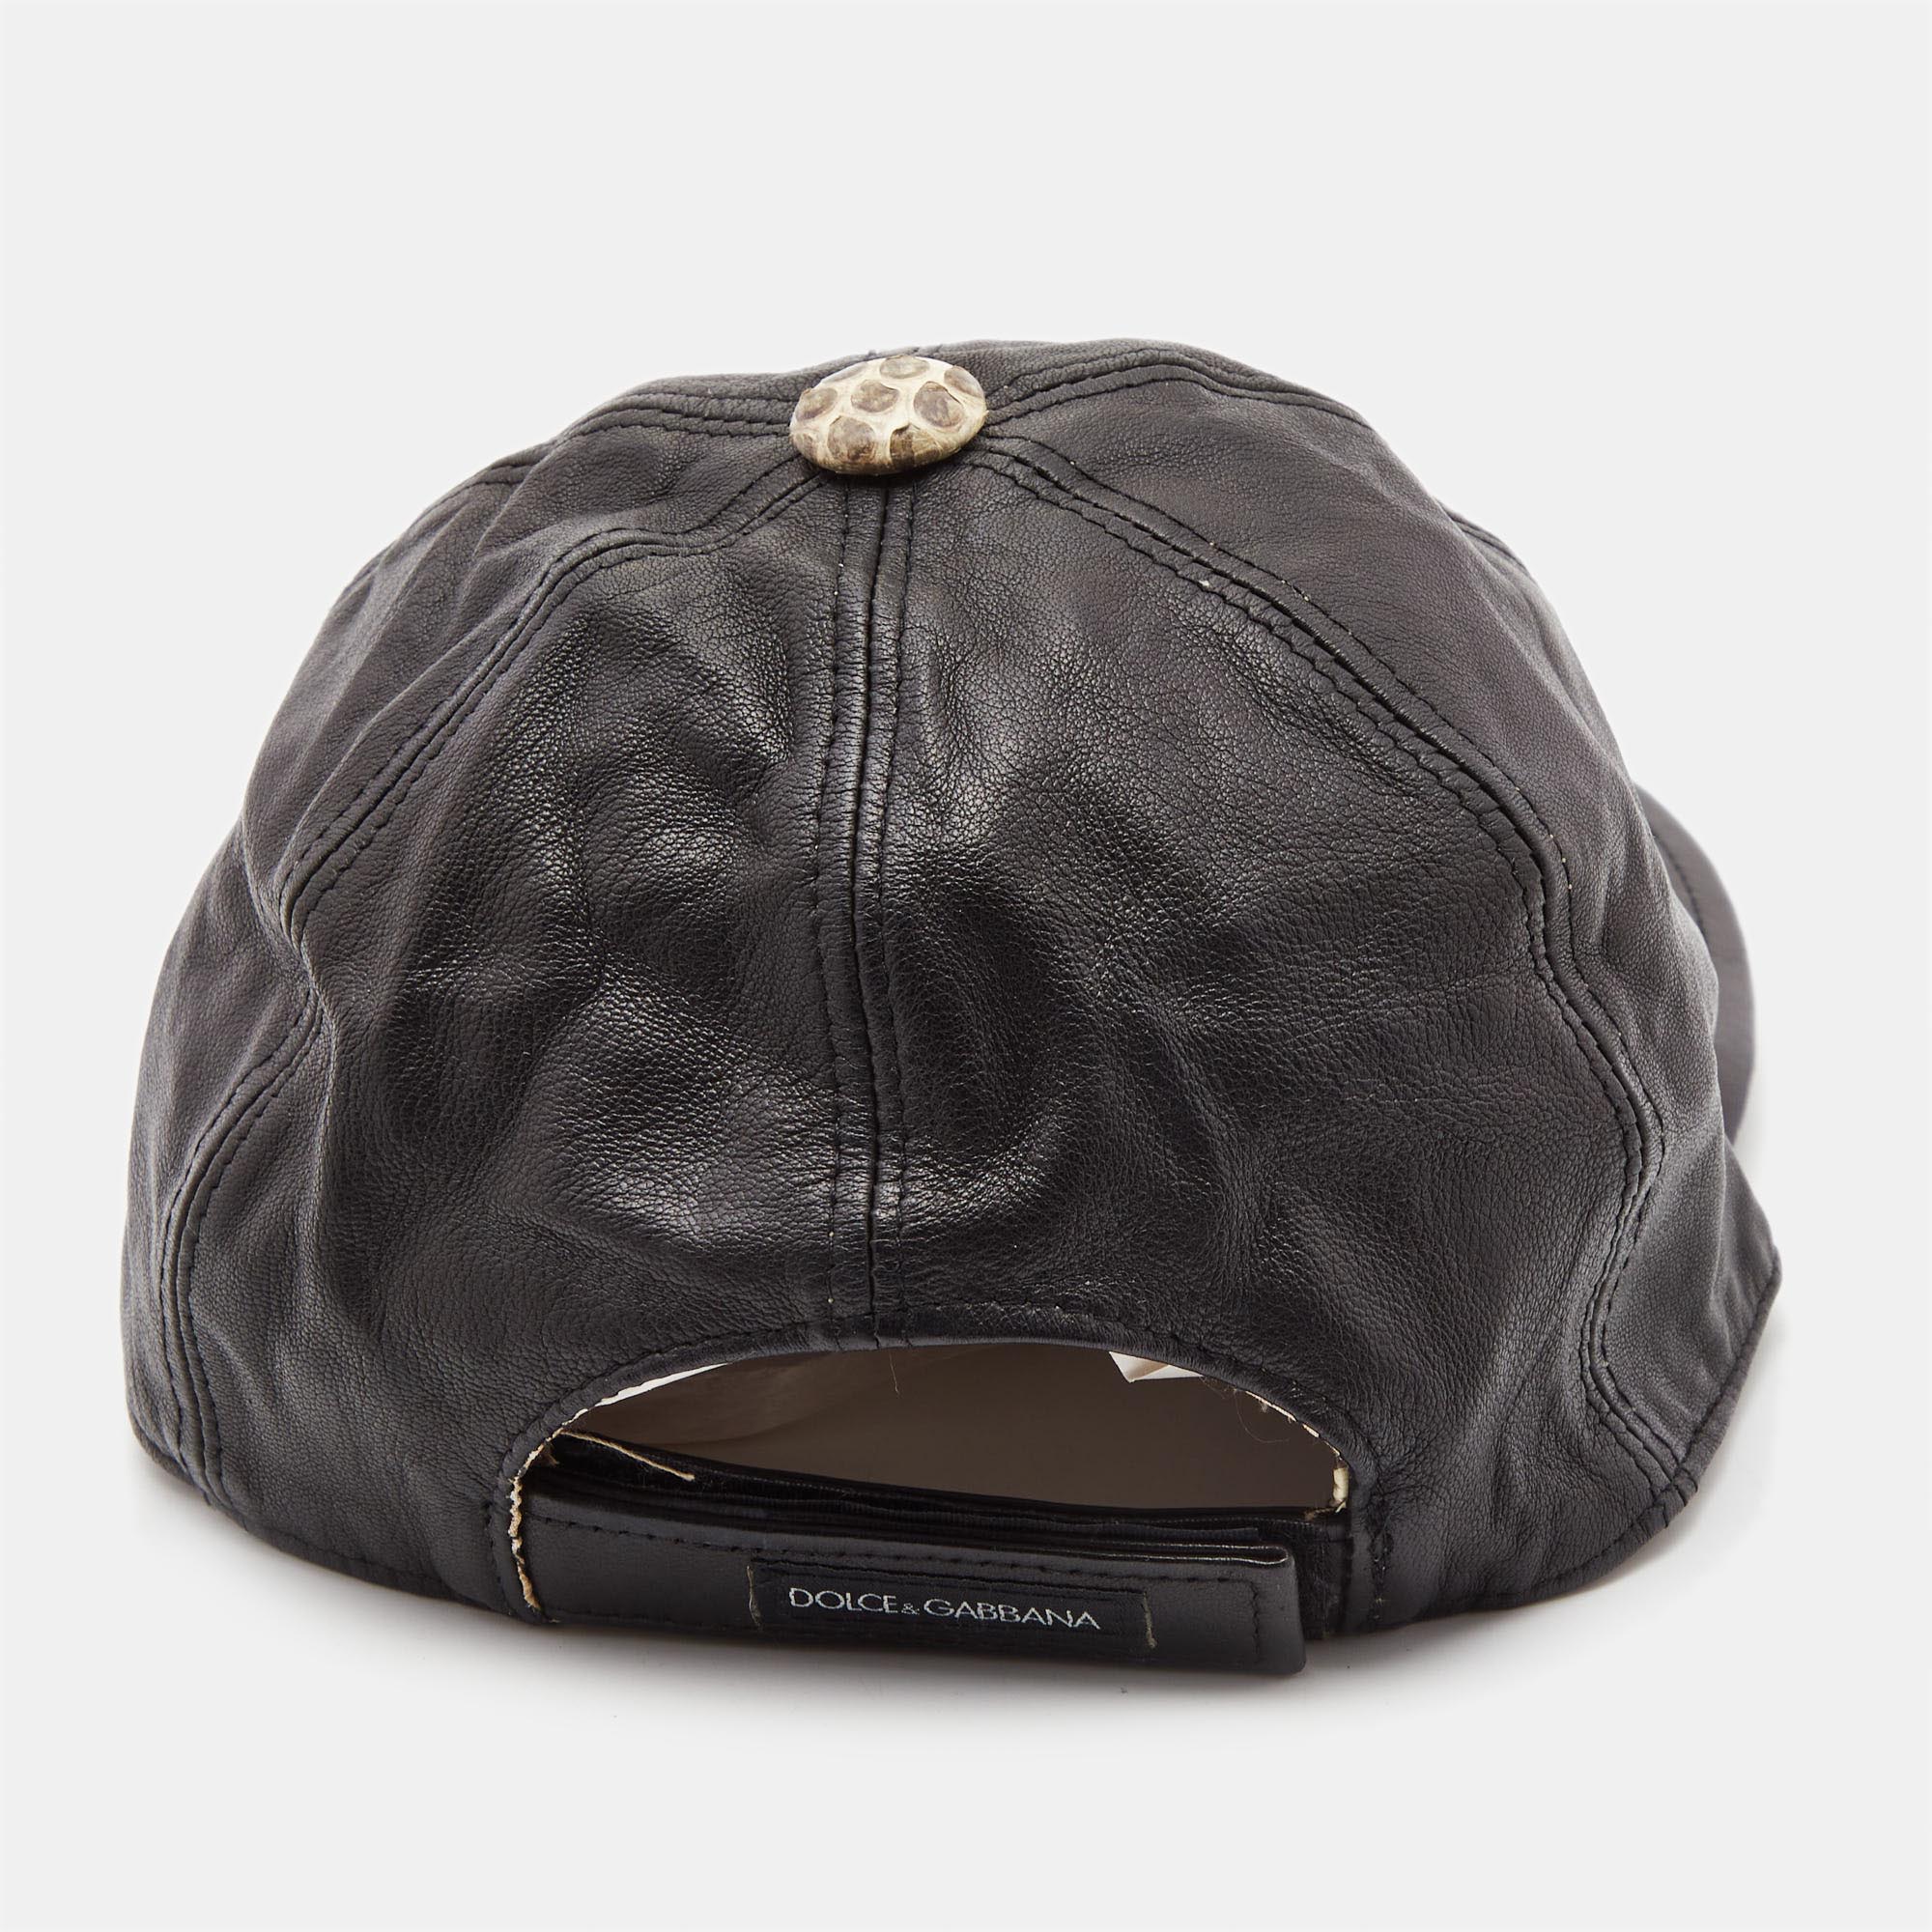 Dolce & Gabbana Black Leather And Python Baseball Cap Size 58